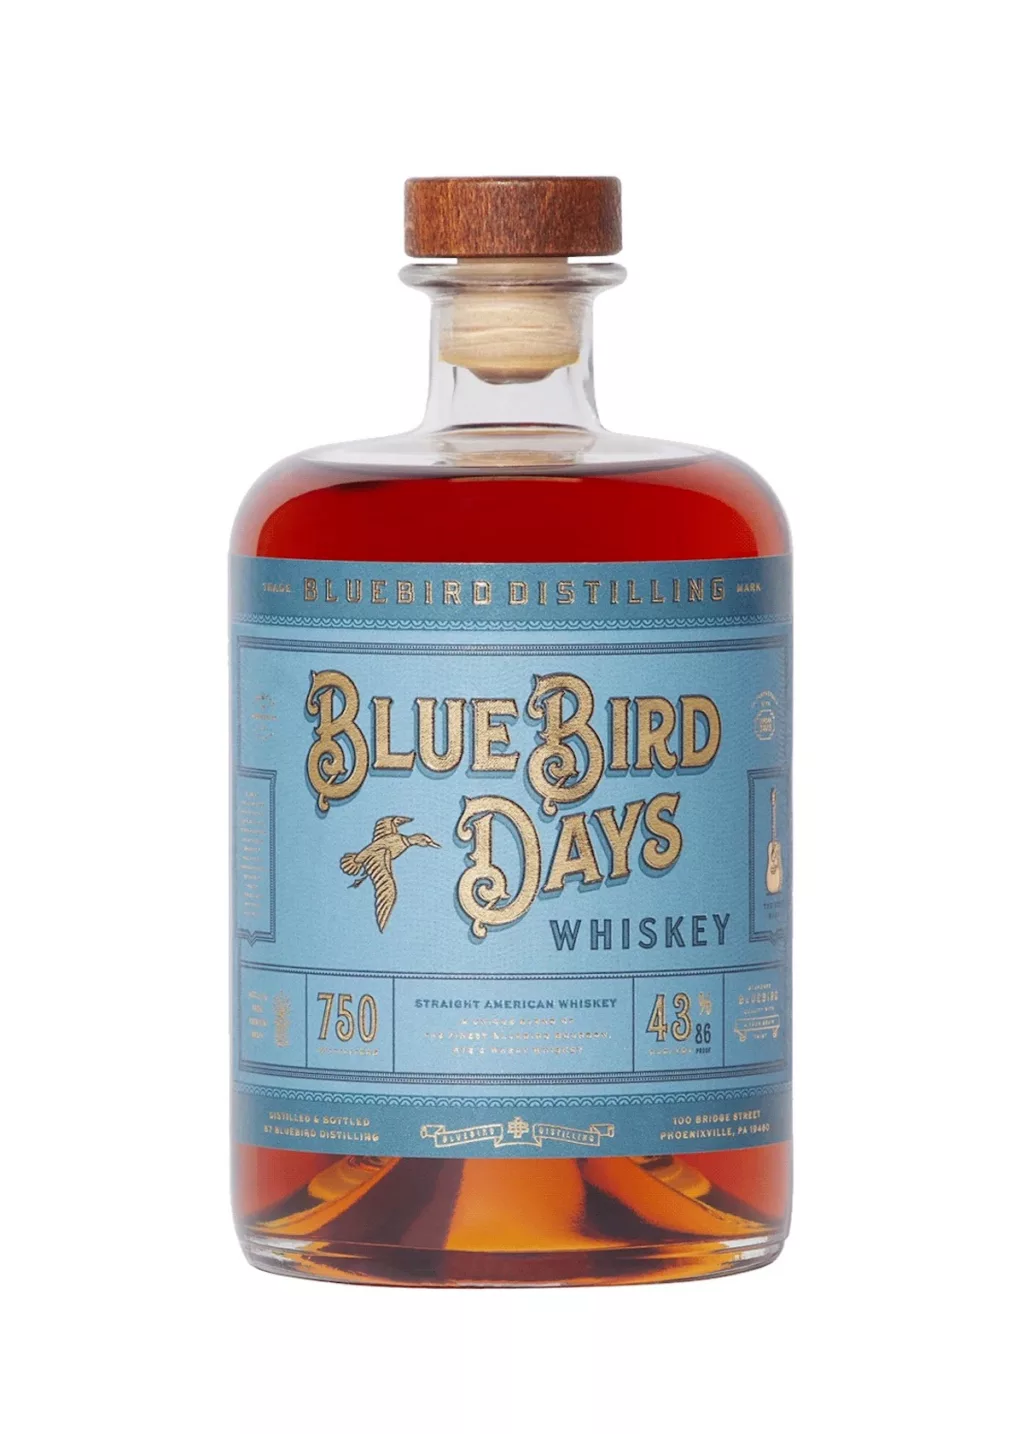 Bluebird Days Straight American Whiskey